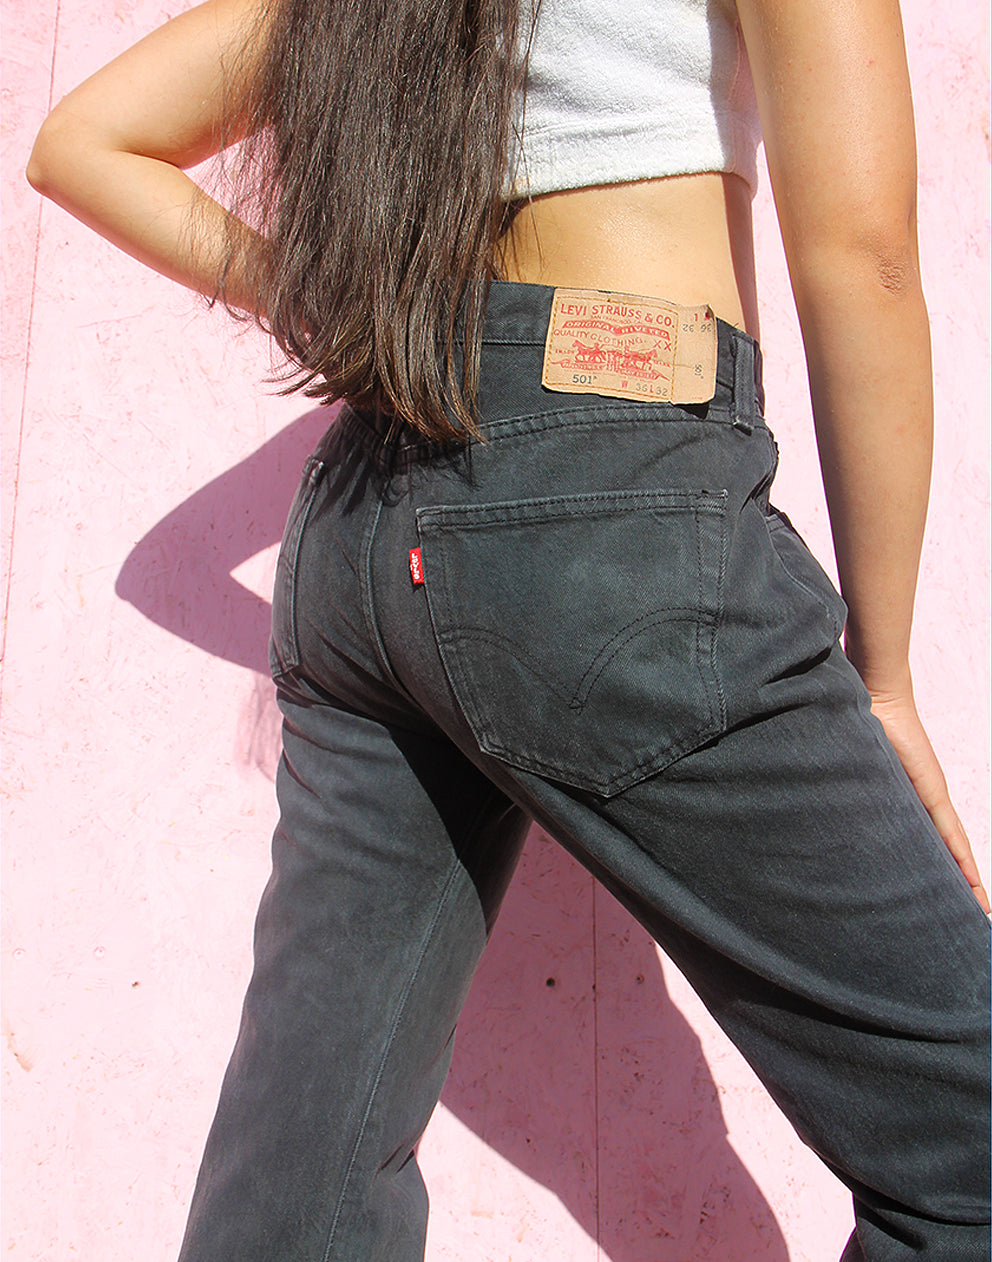 501® Levi's® Original Jeans - Pink